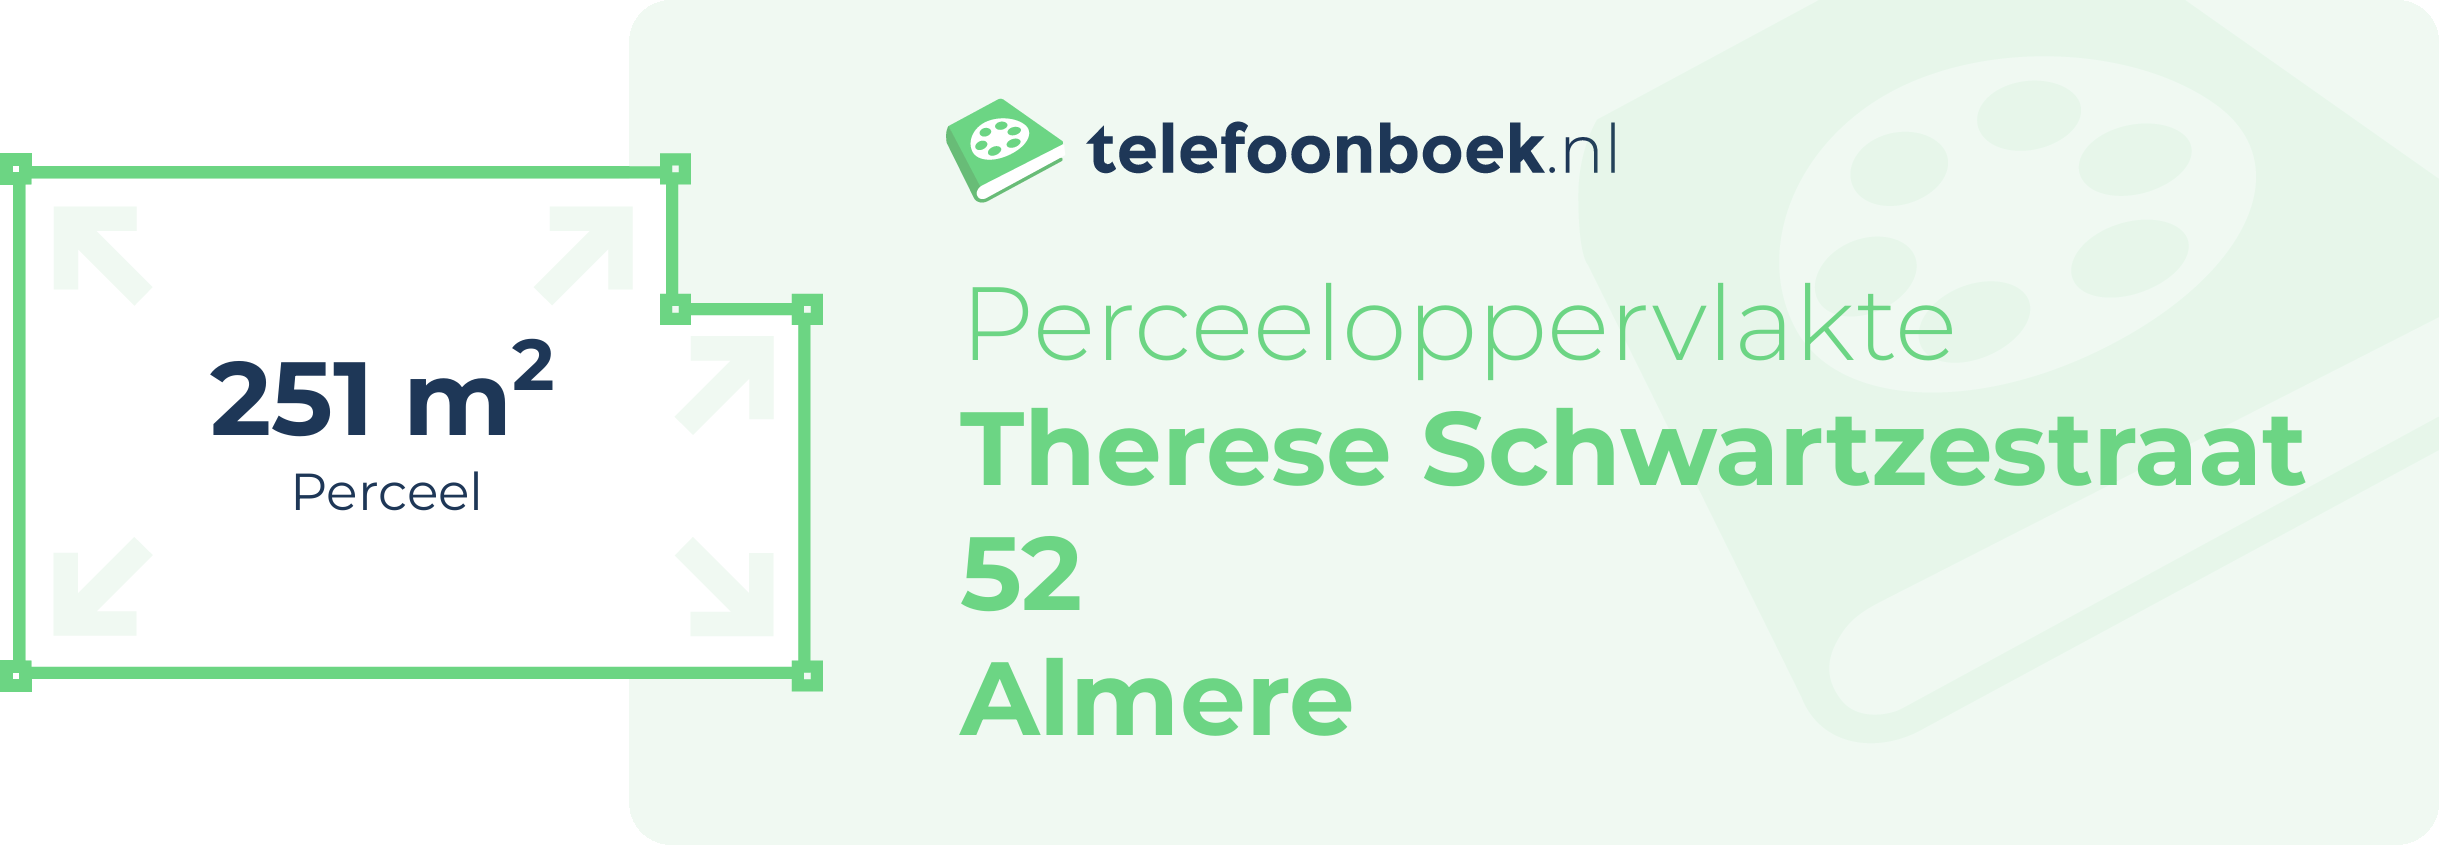 Perceeloppervlakte Therese Schwartzestraat 52 Almere